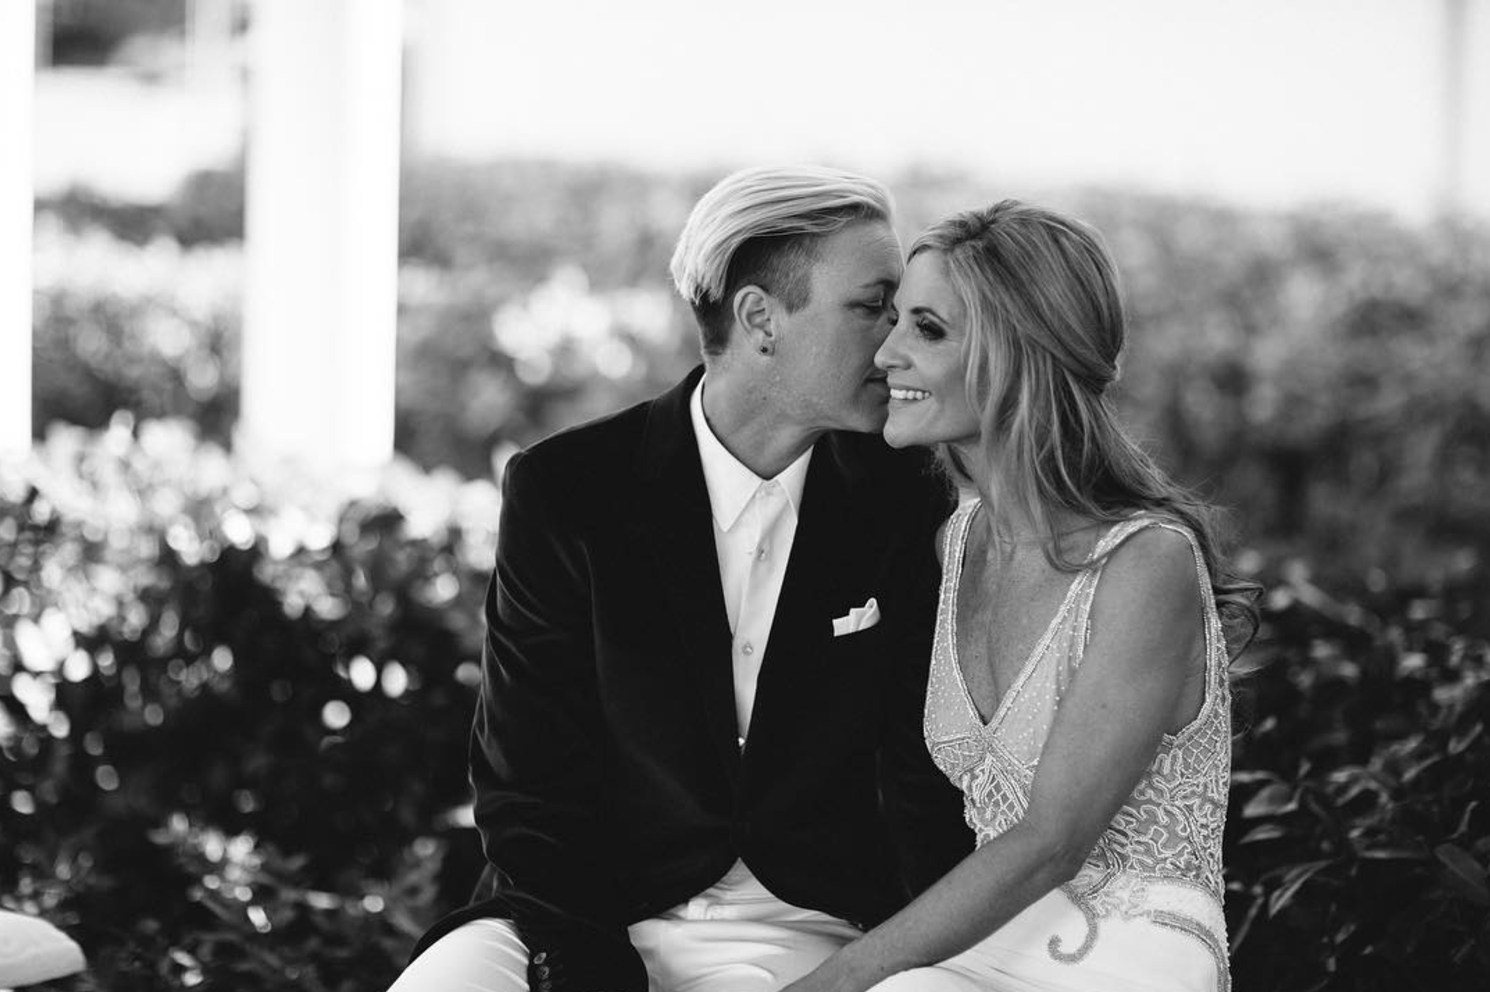 Soccer star Abby Wambach marries blogger Glennon Doyle Melton